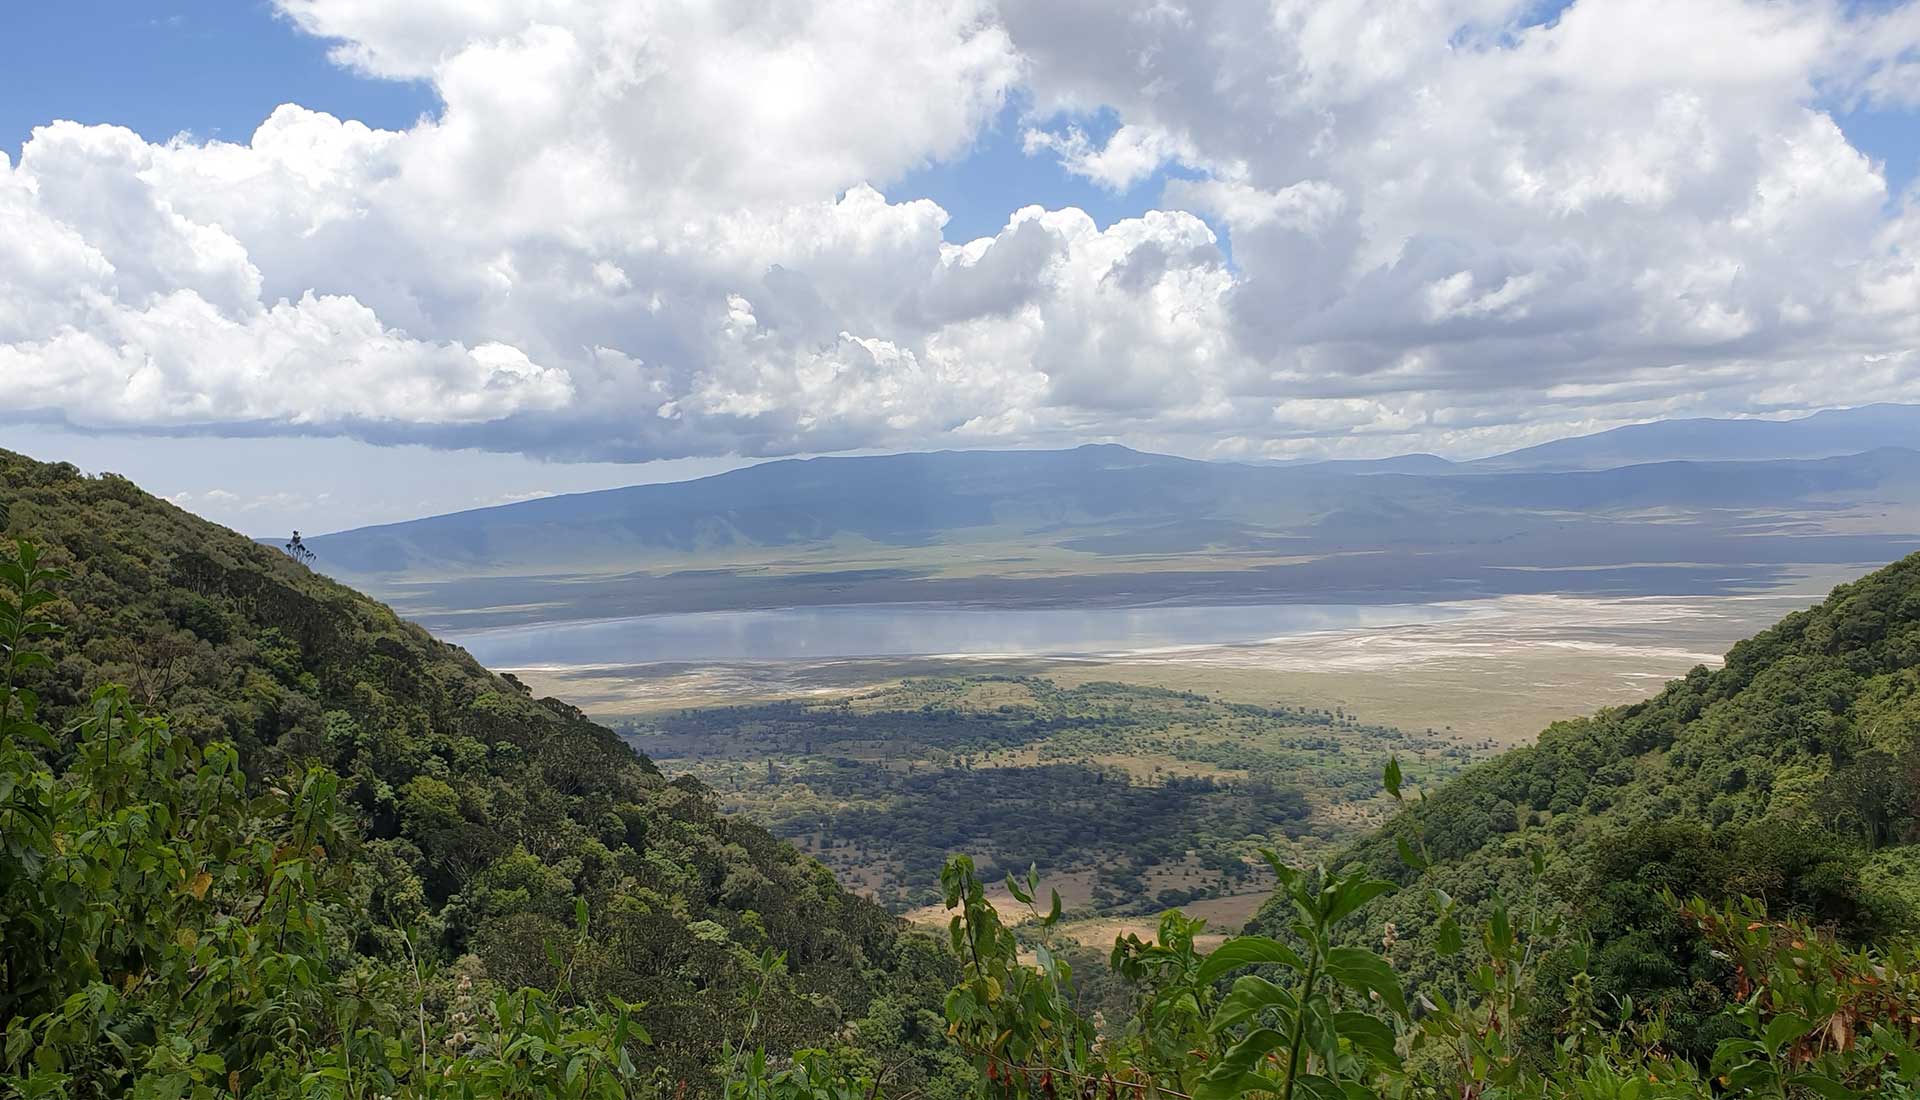 Ngorongoro Crater Day tour